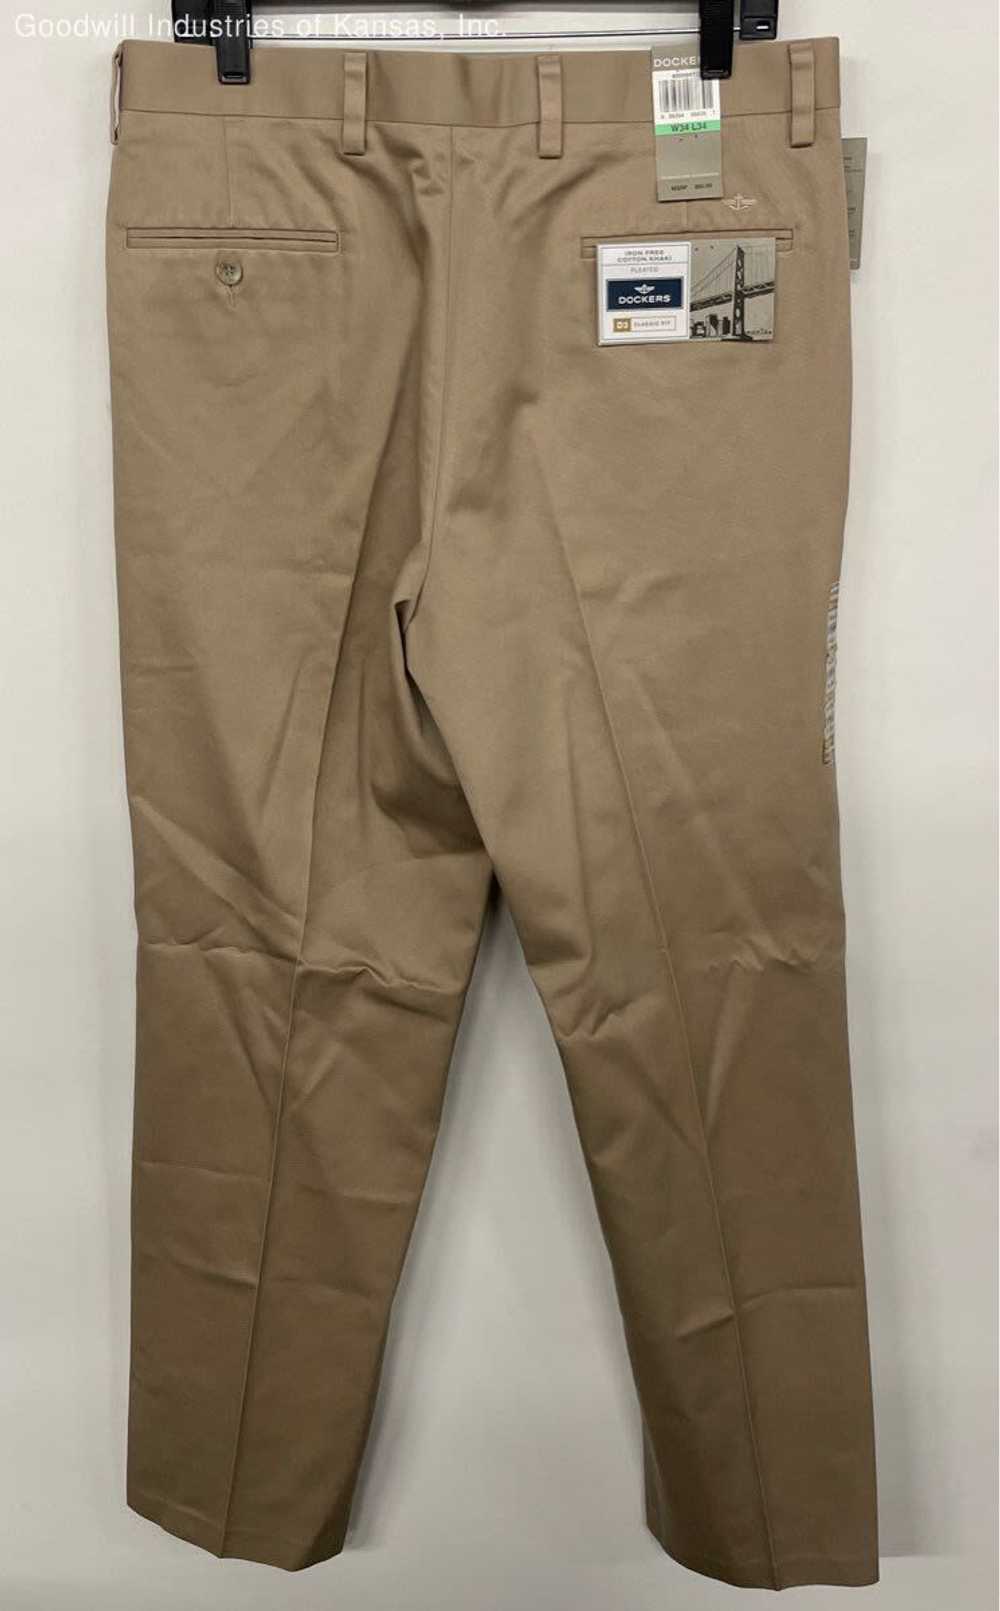 Dockers Khaki Pants - Size 34x34 - image 2